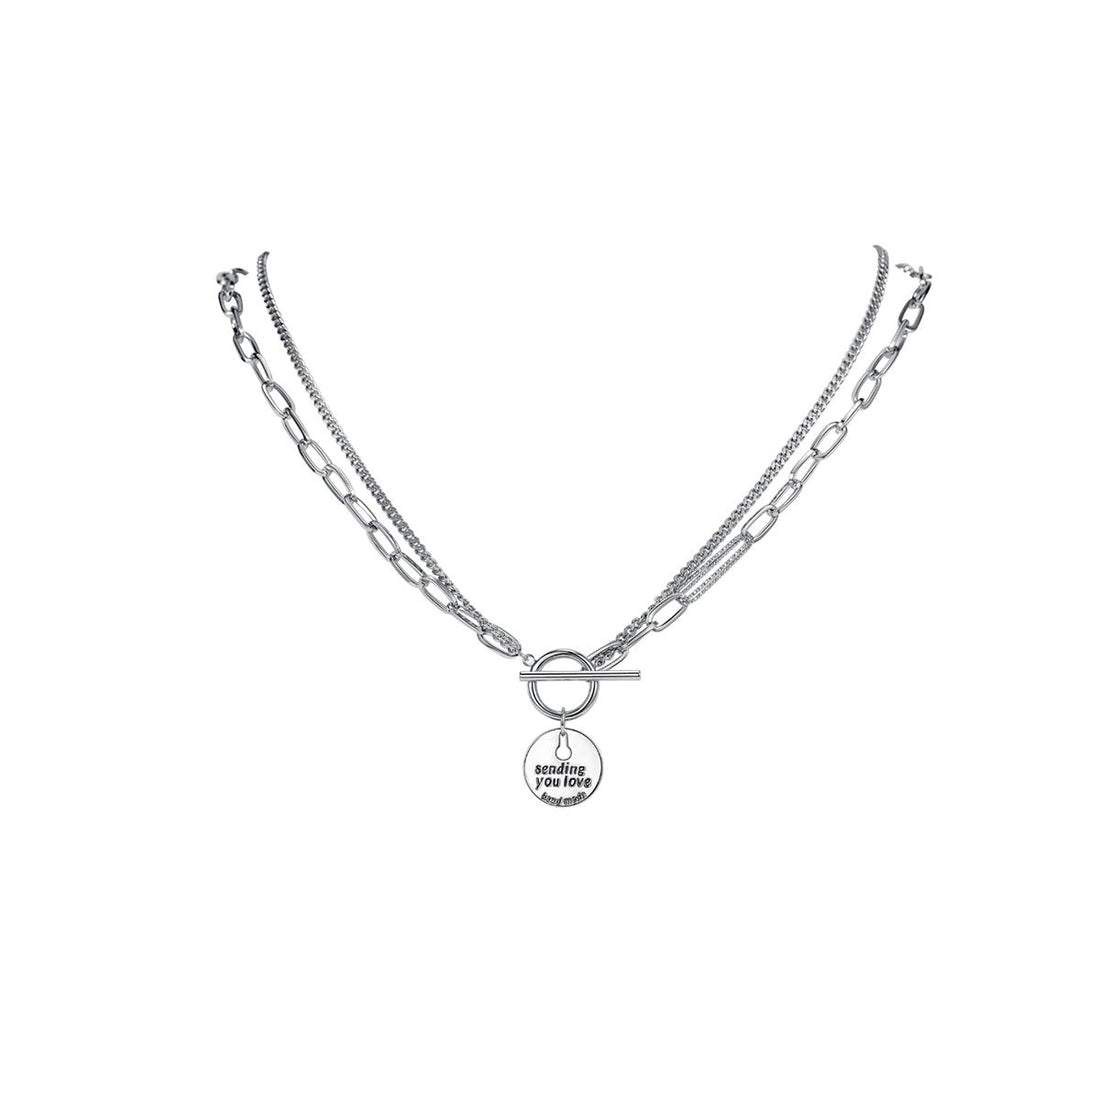 Sending You Love Silver Necklace - 0cm